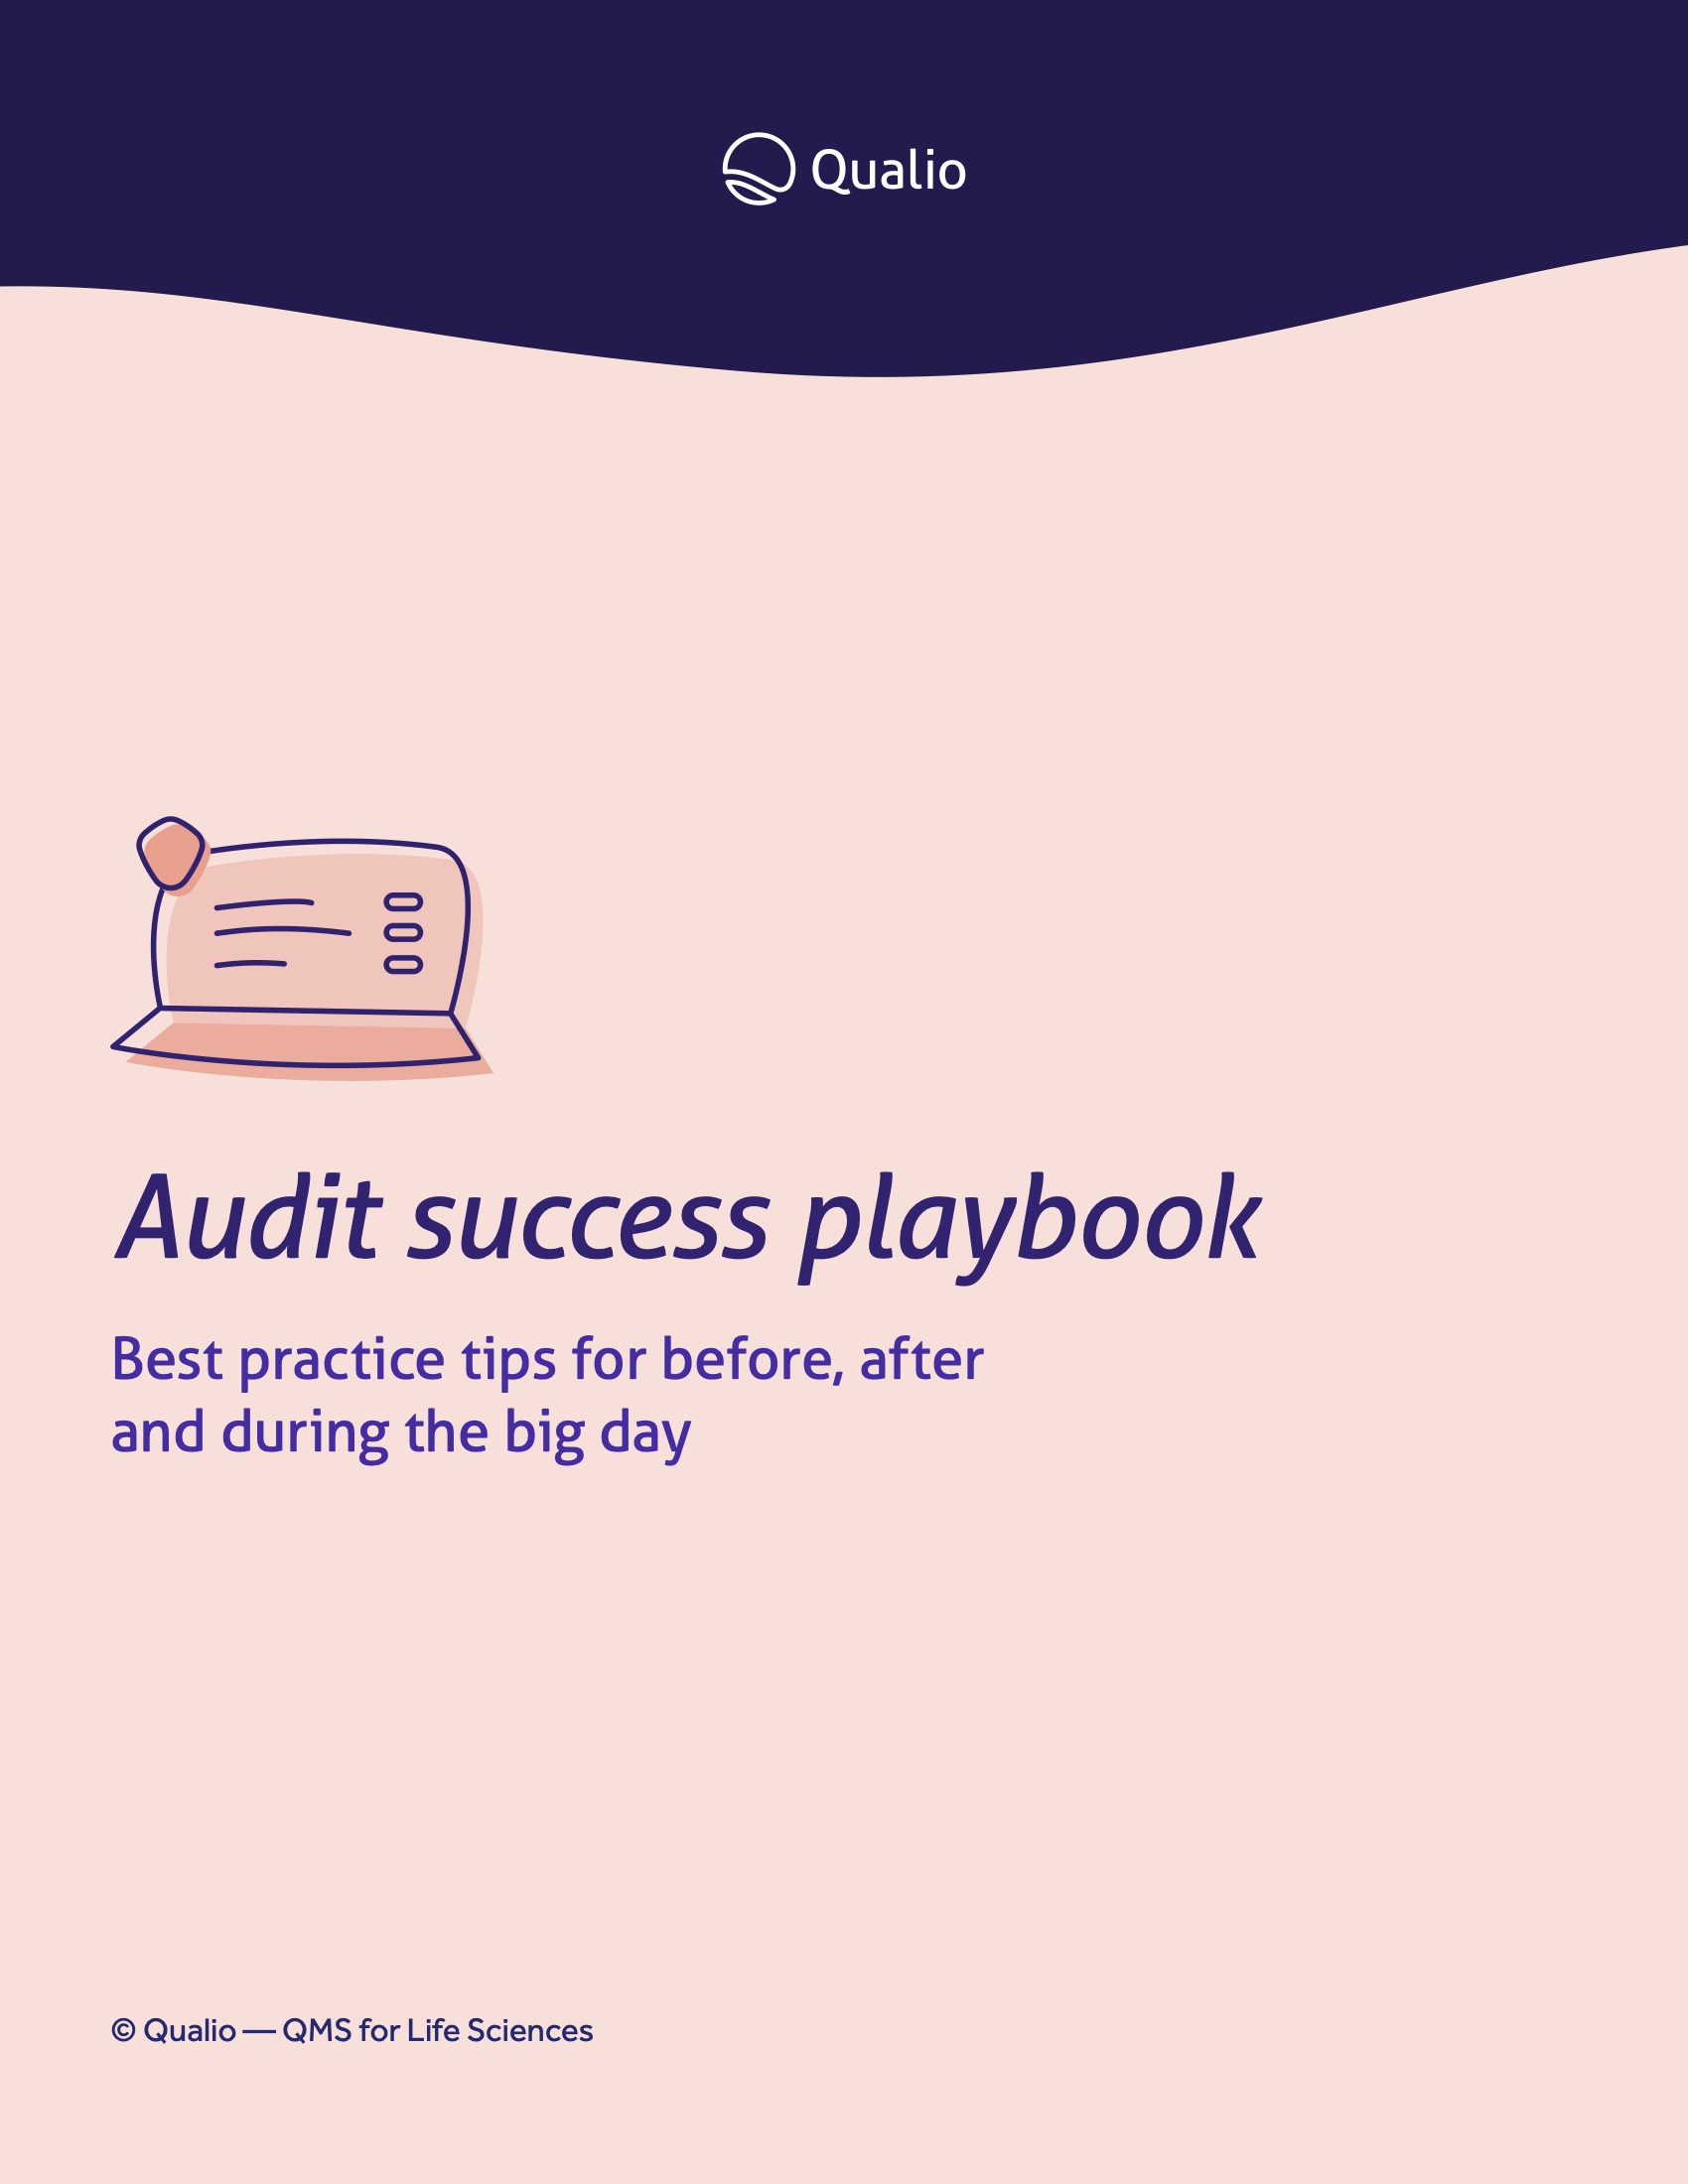 Audit playbook